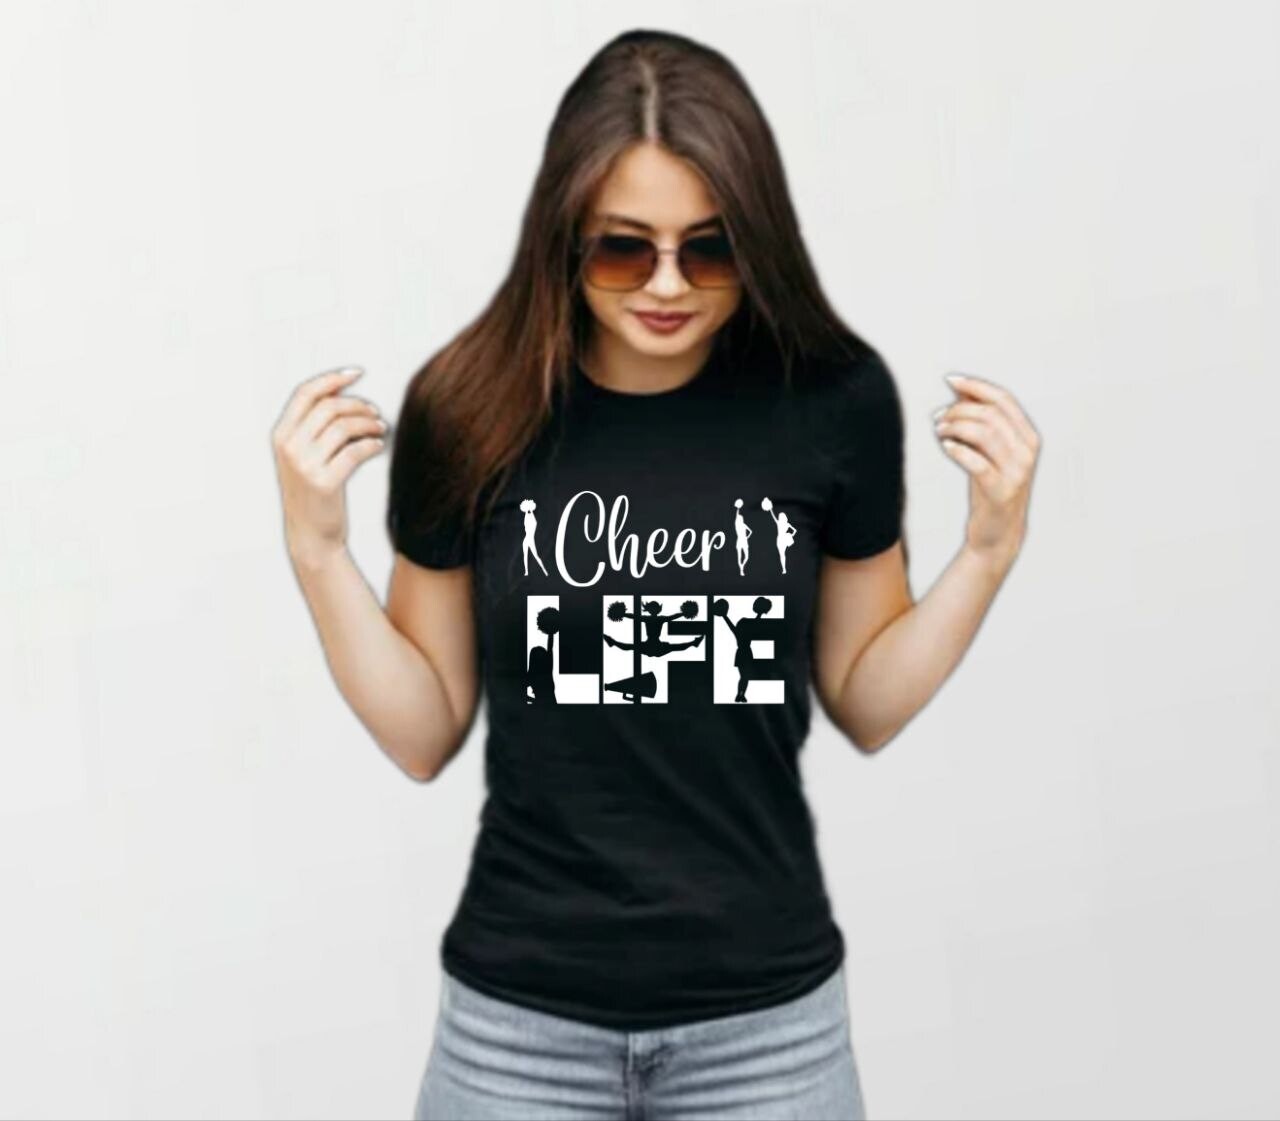 Cheer life_Women's Elite Tee black